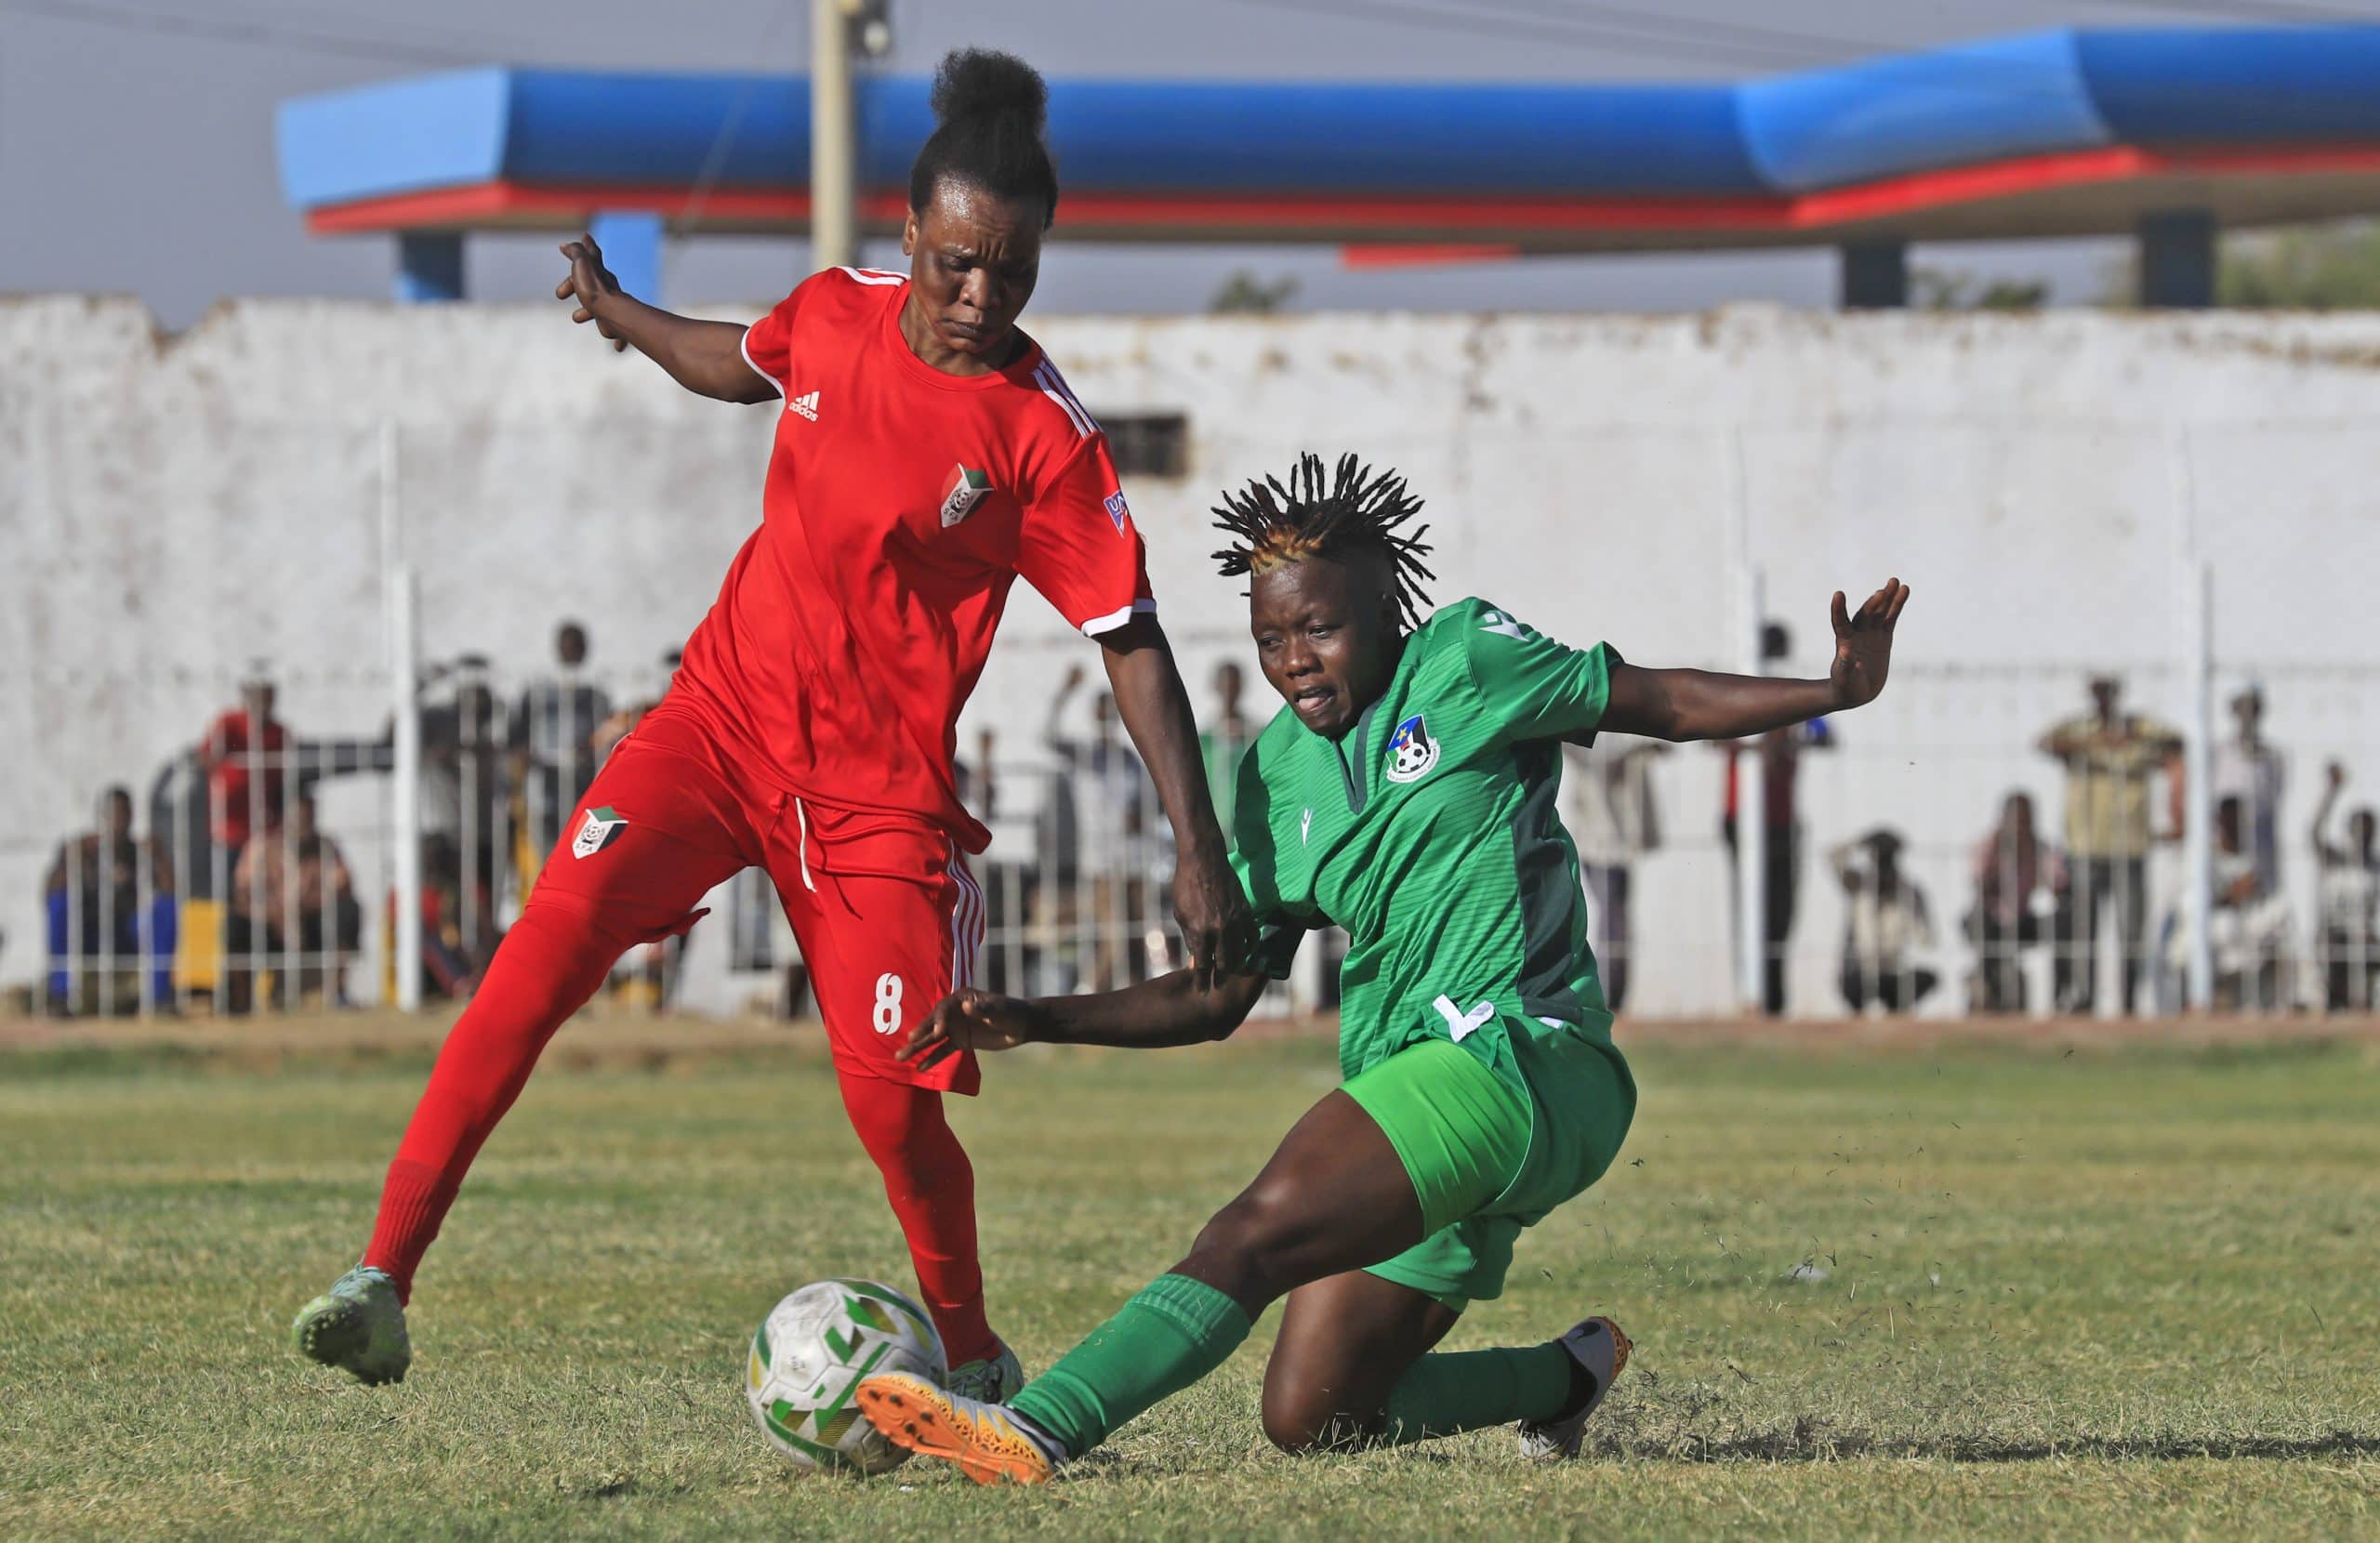 Le public soudanais dit « oui » au football féminin